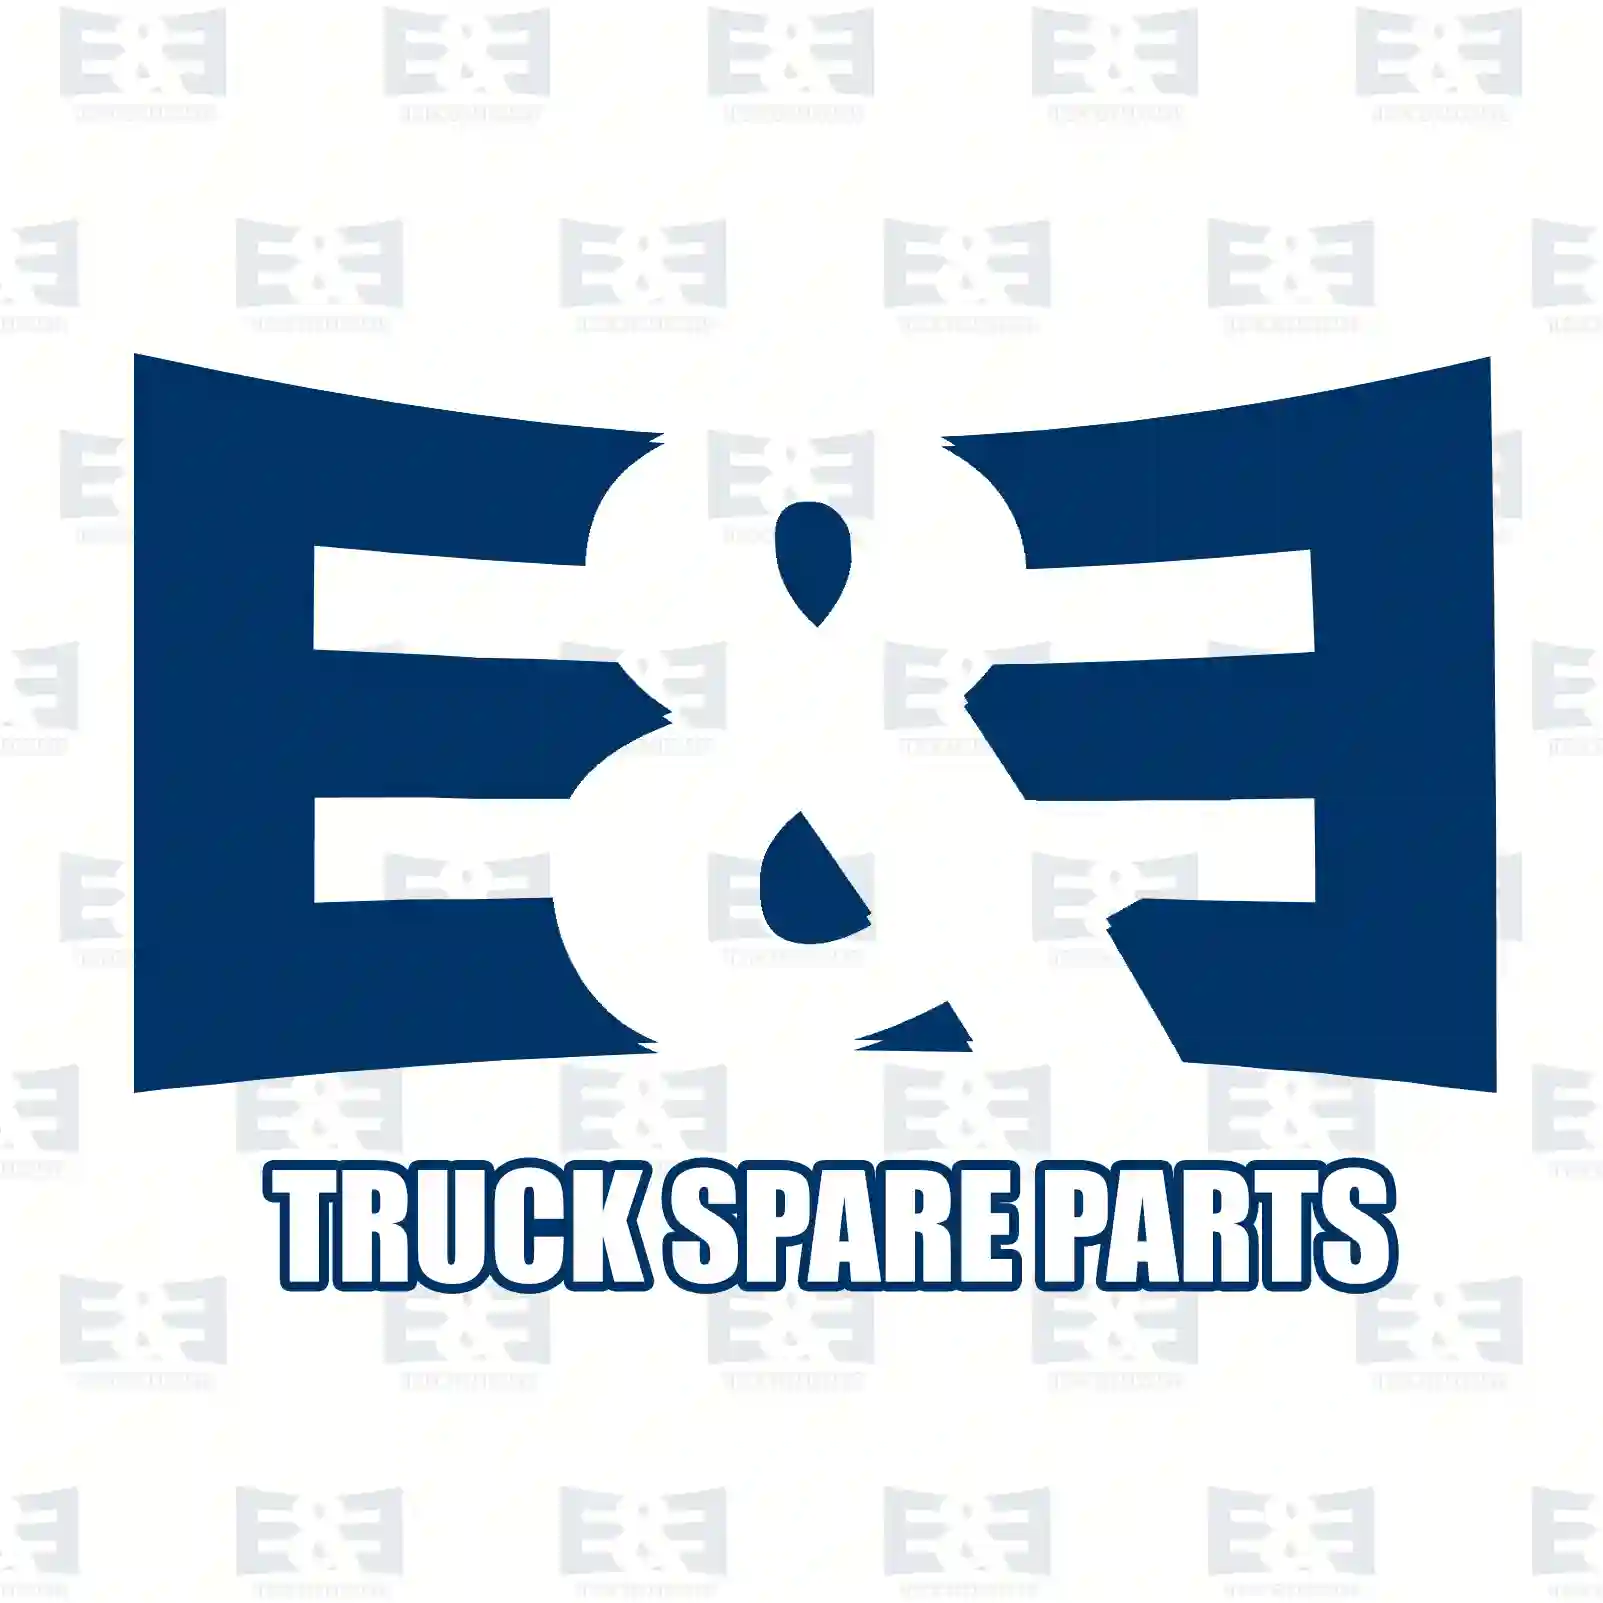 Disc brake pad kit, with accessories, 2E2297337, 1962438, 1962594, 06403229242, 06403229302, 06403229332, 81508205108, 81508205112, 81508206065, 81508206066 ||  2E2297337 E&E Truck Spare Parts | Truck Spare Parts, Auotomotive Spare Parts Disc brake pad kit, with accessories, 2E2297337, 1962438, 1962594, 06403229242, 06403229302, 06403229332, 81508205108, 81508205112, 81508206065, 81508206066 ||  2E2297337 E&E Truck Spare Parts | Truck Spare Parts, Auotomotive Spare Parts